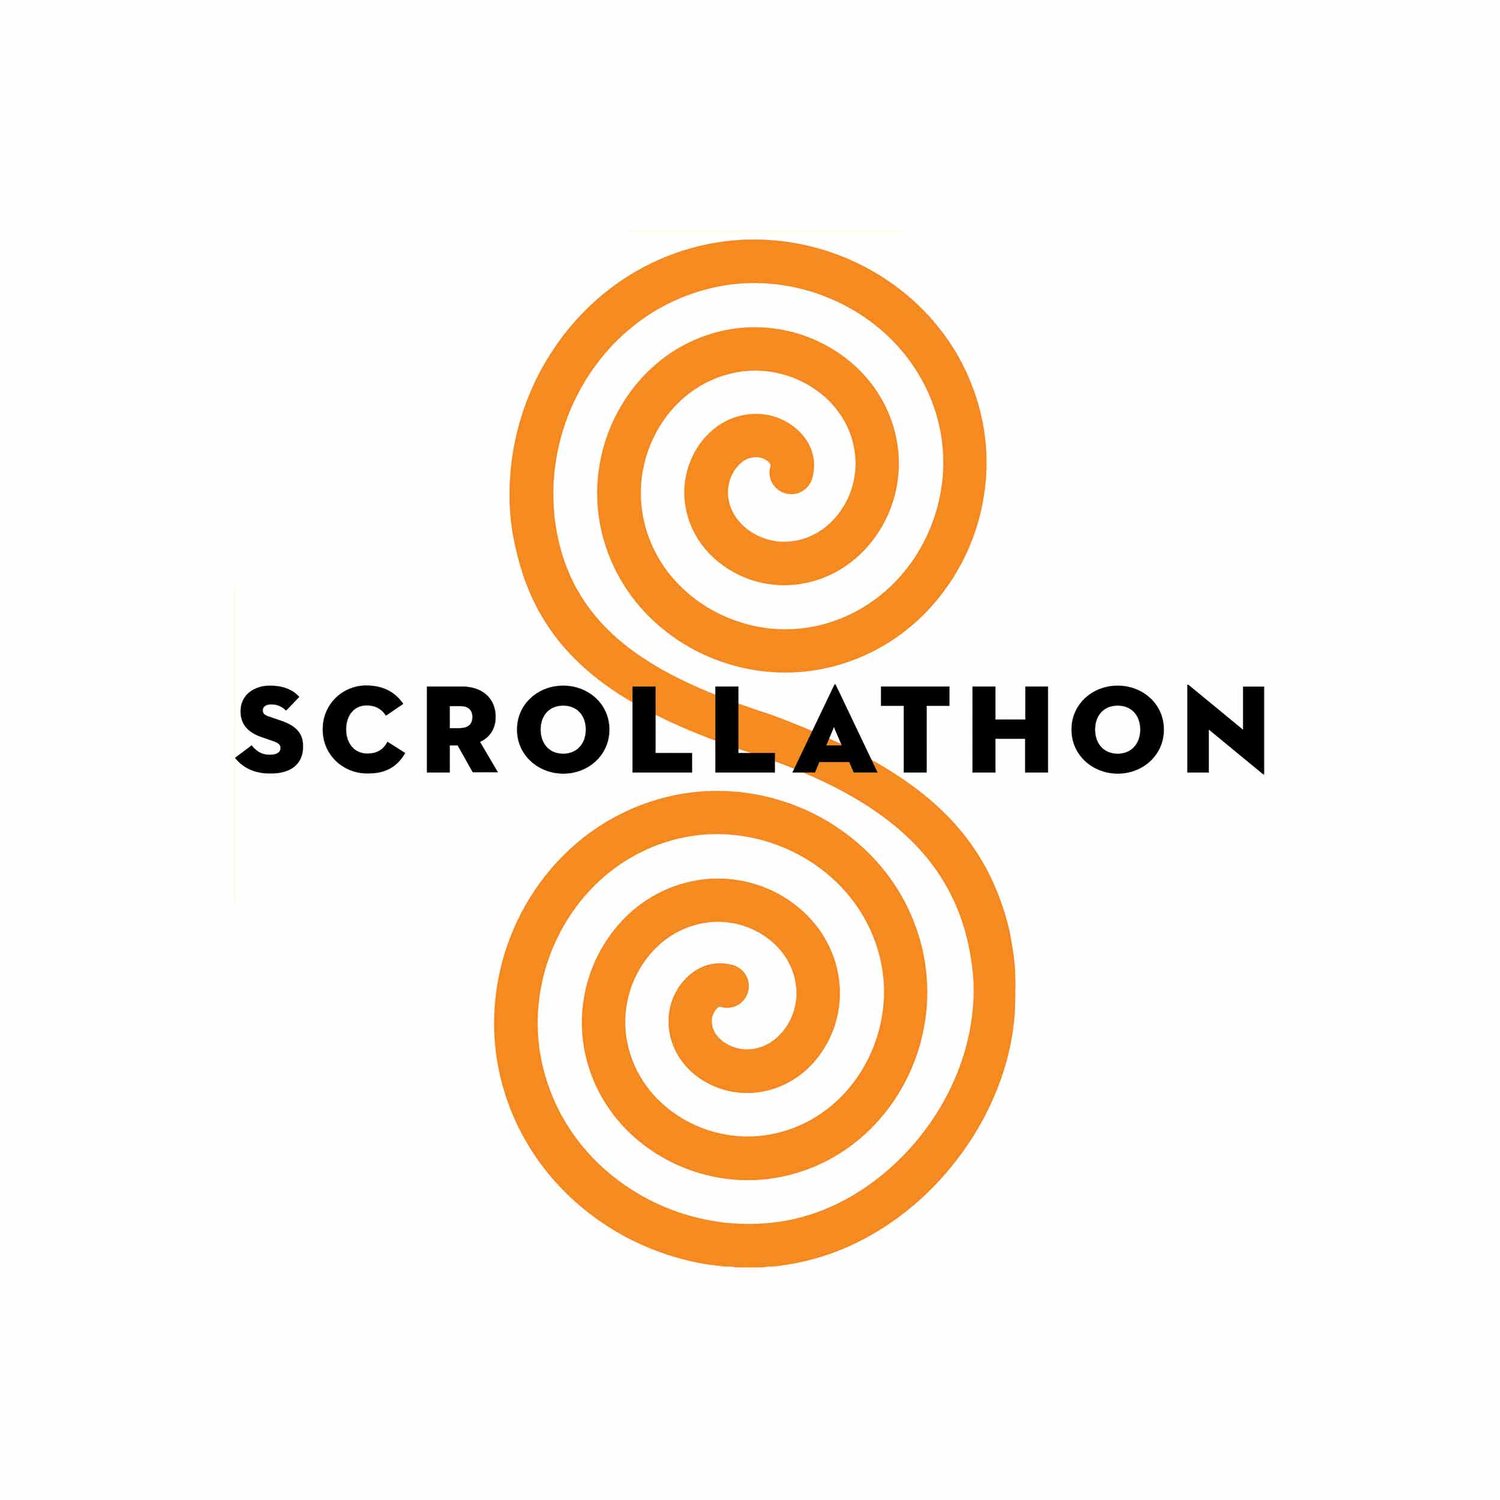 Scrollathon